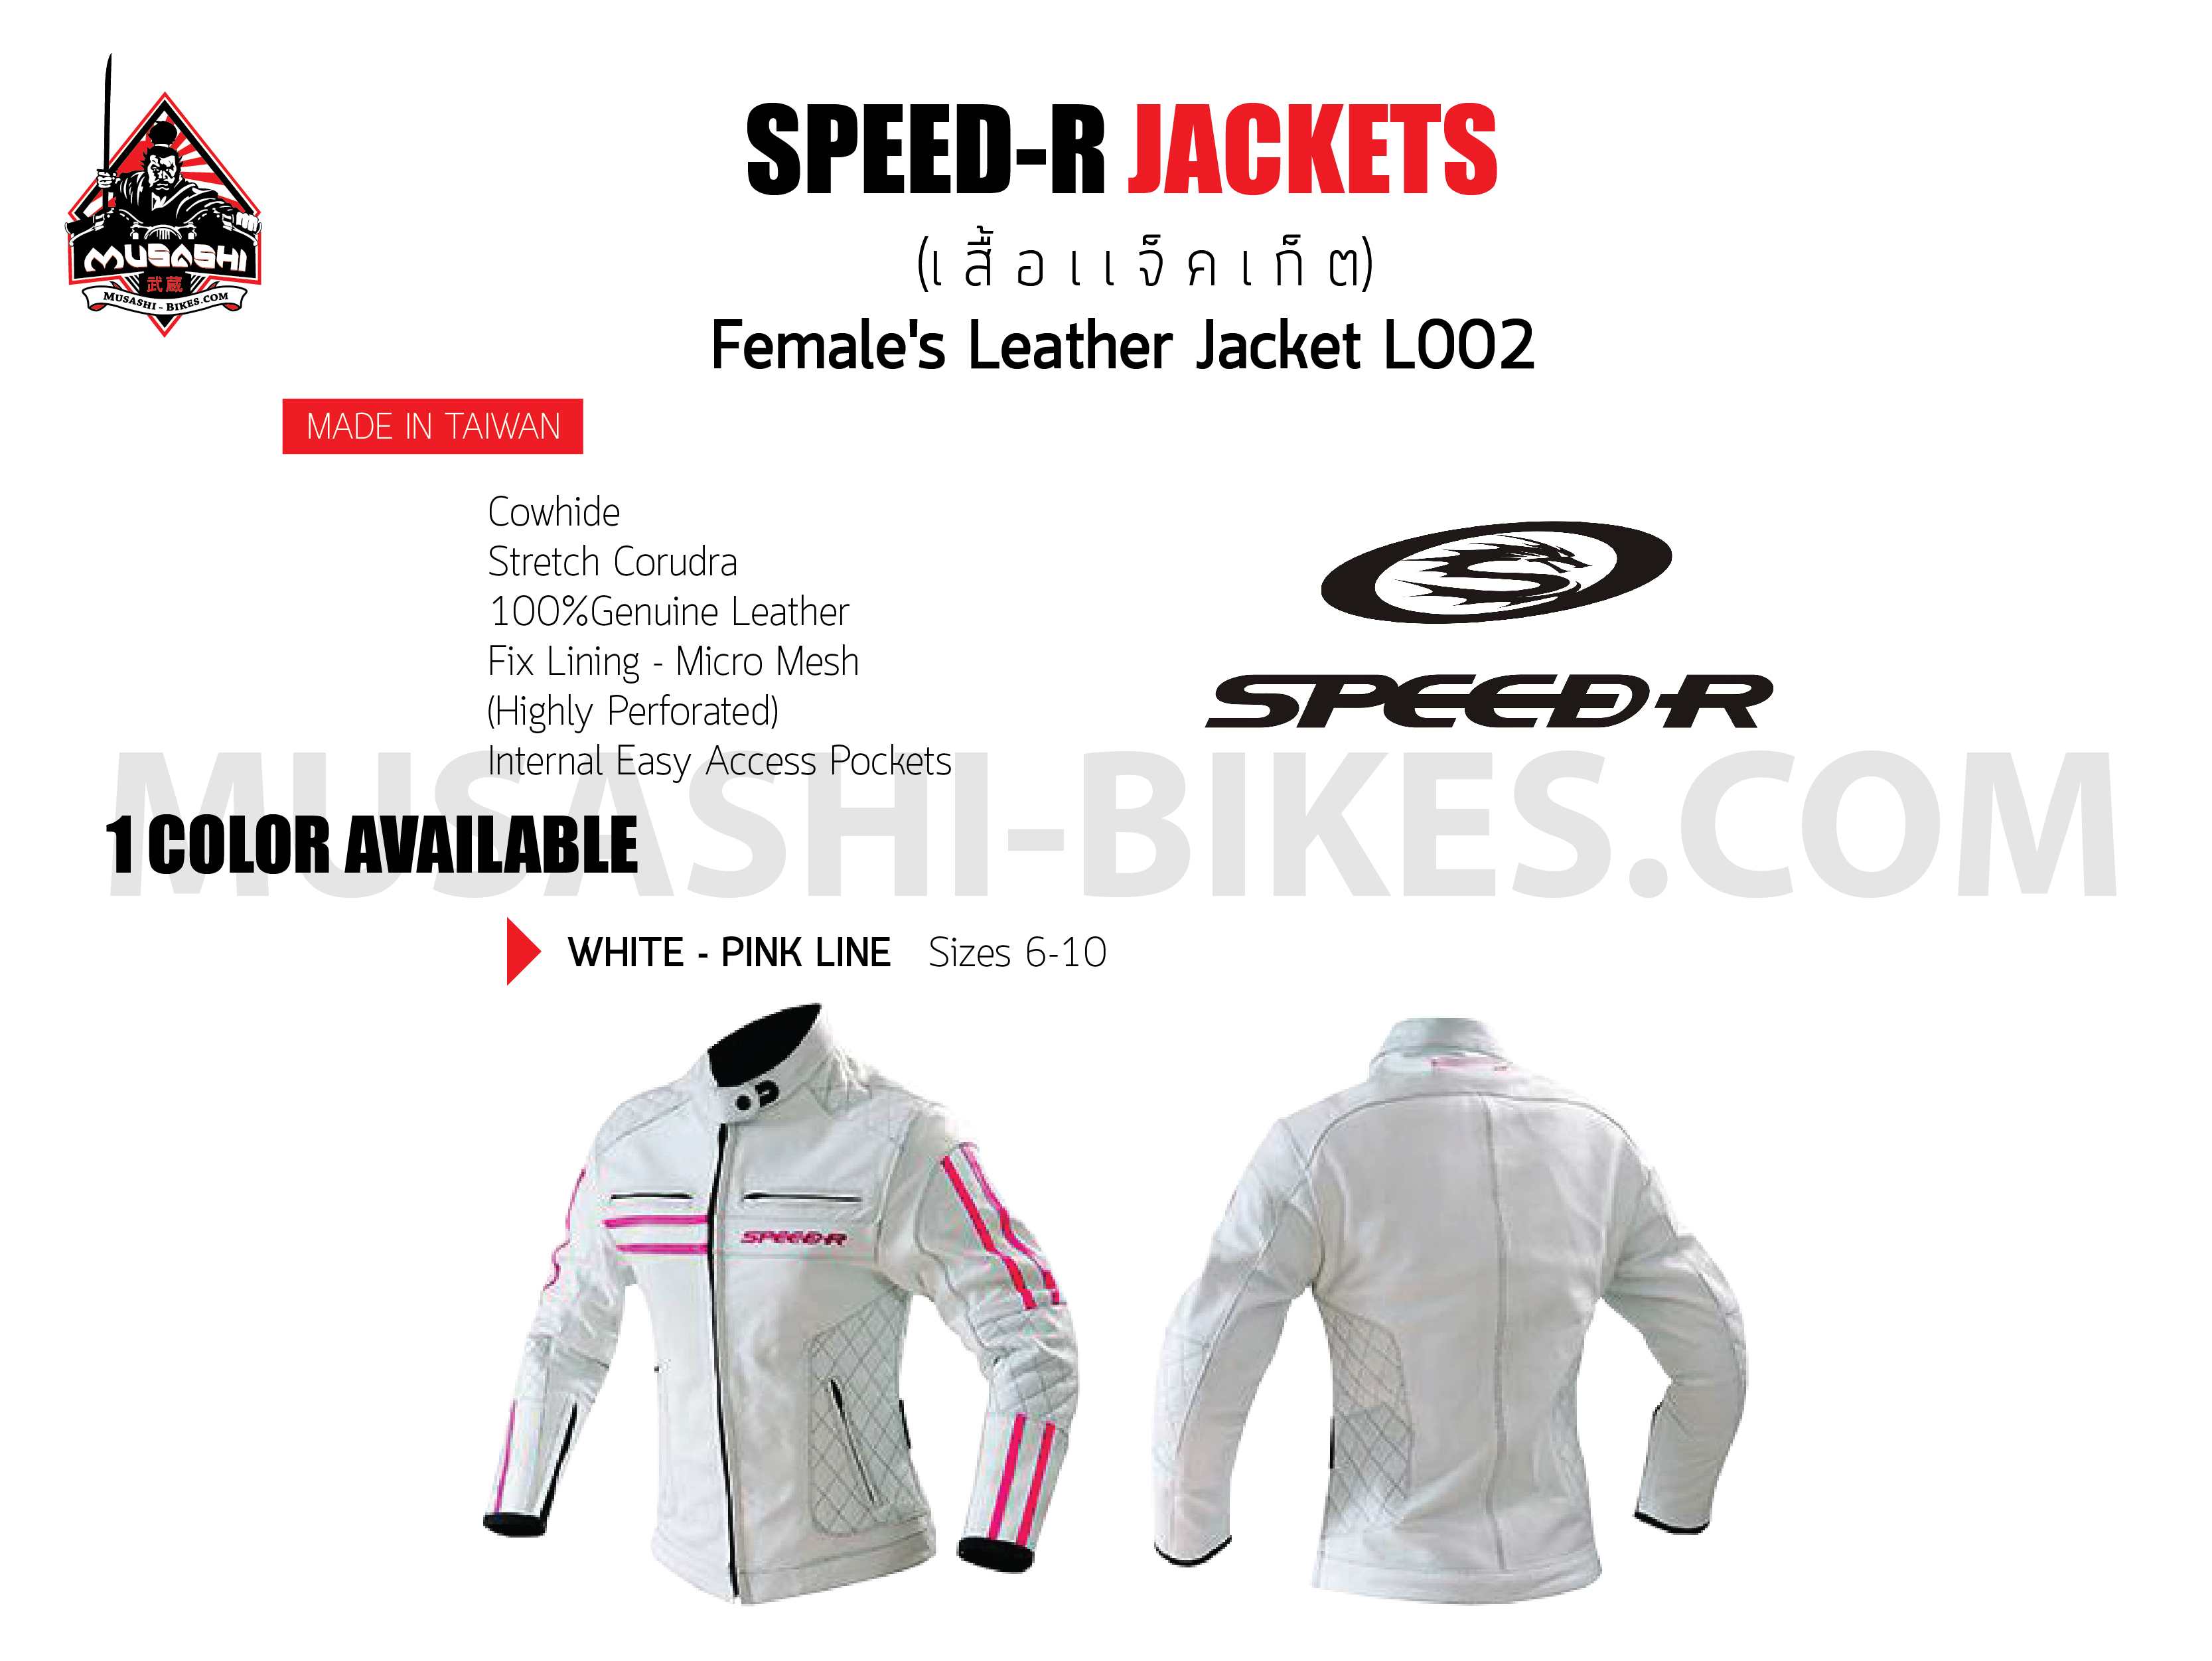 Female's Leather Jacket L002